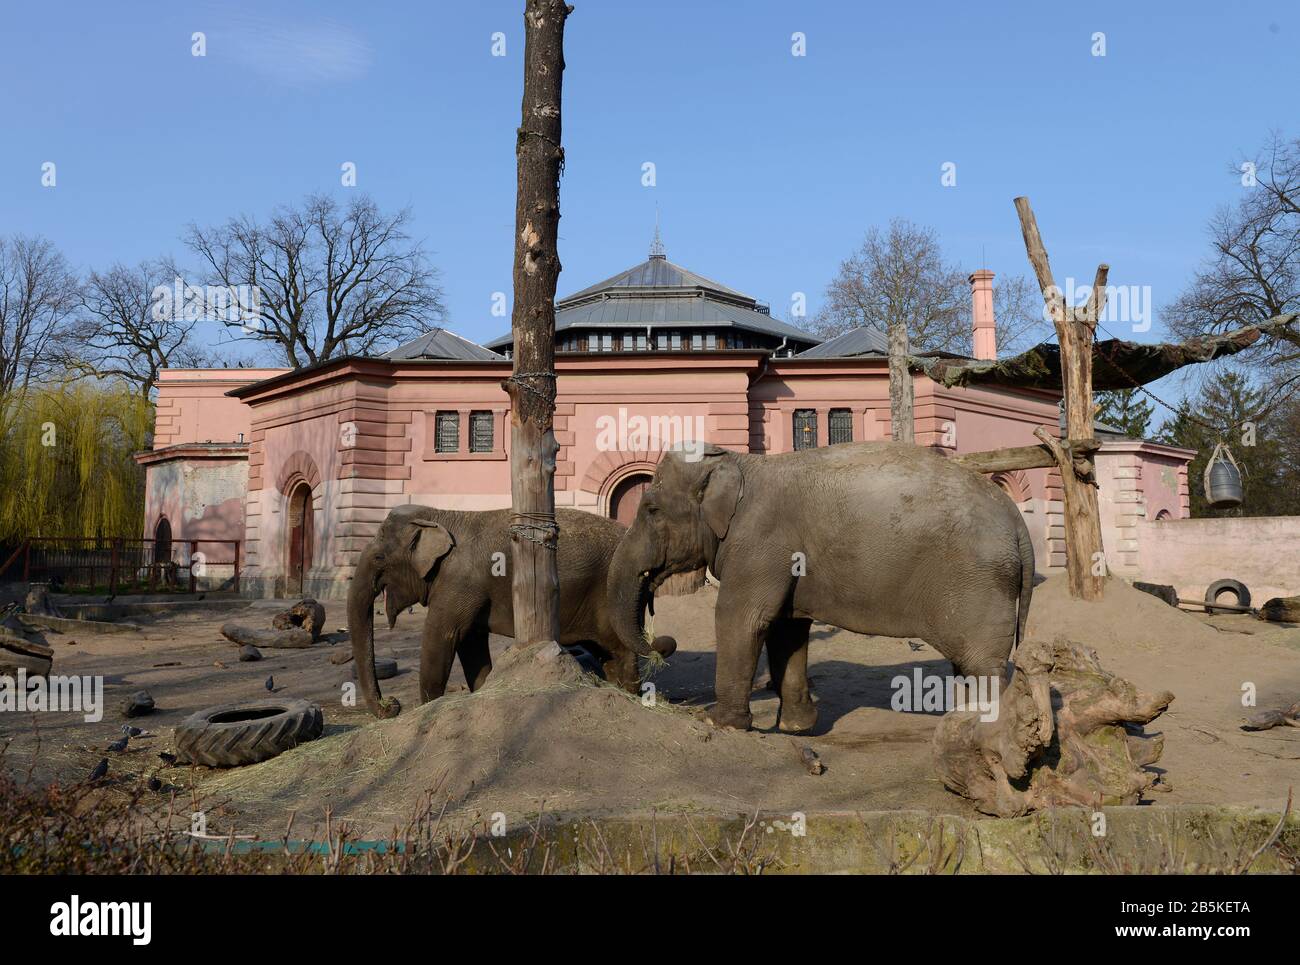 Asiatischer Elefant (Elephas maximus), Zoo, Breslau, Niederschlesien, Polen Stock Photo